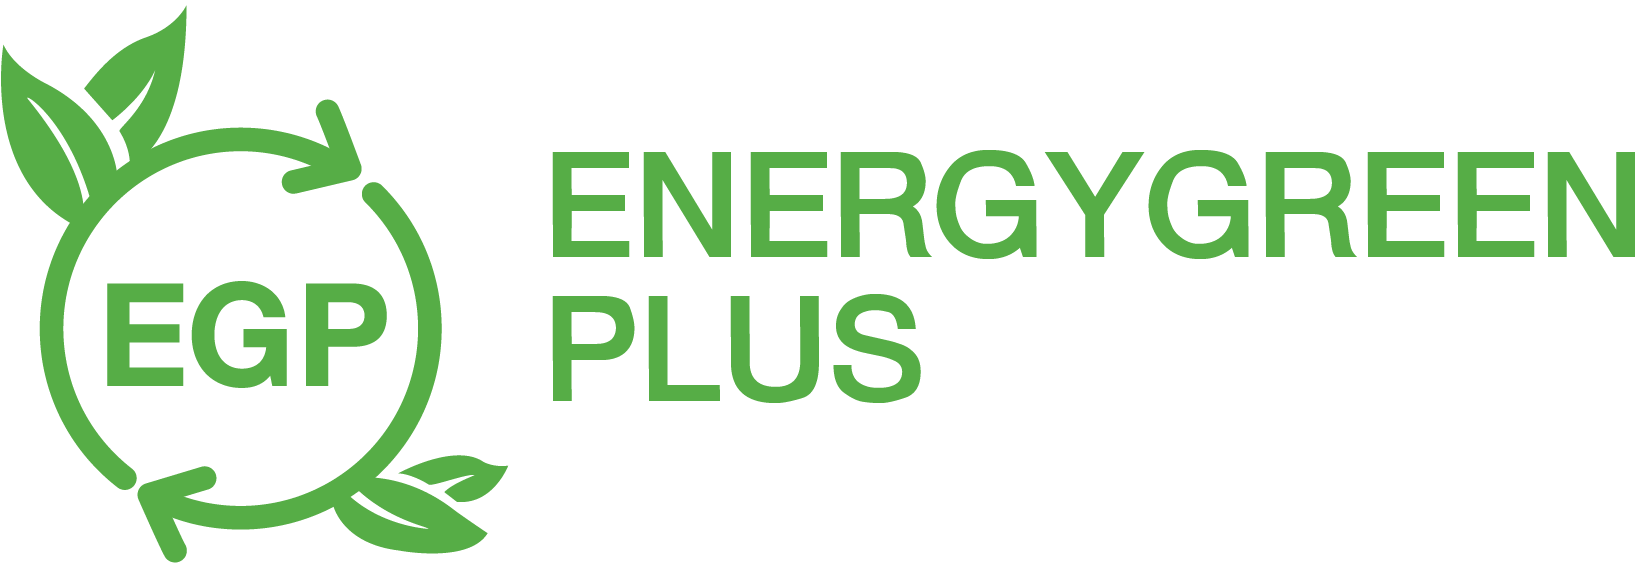 Energy Green Plus